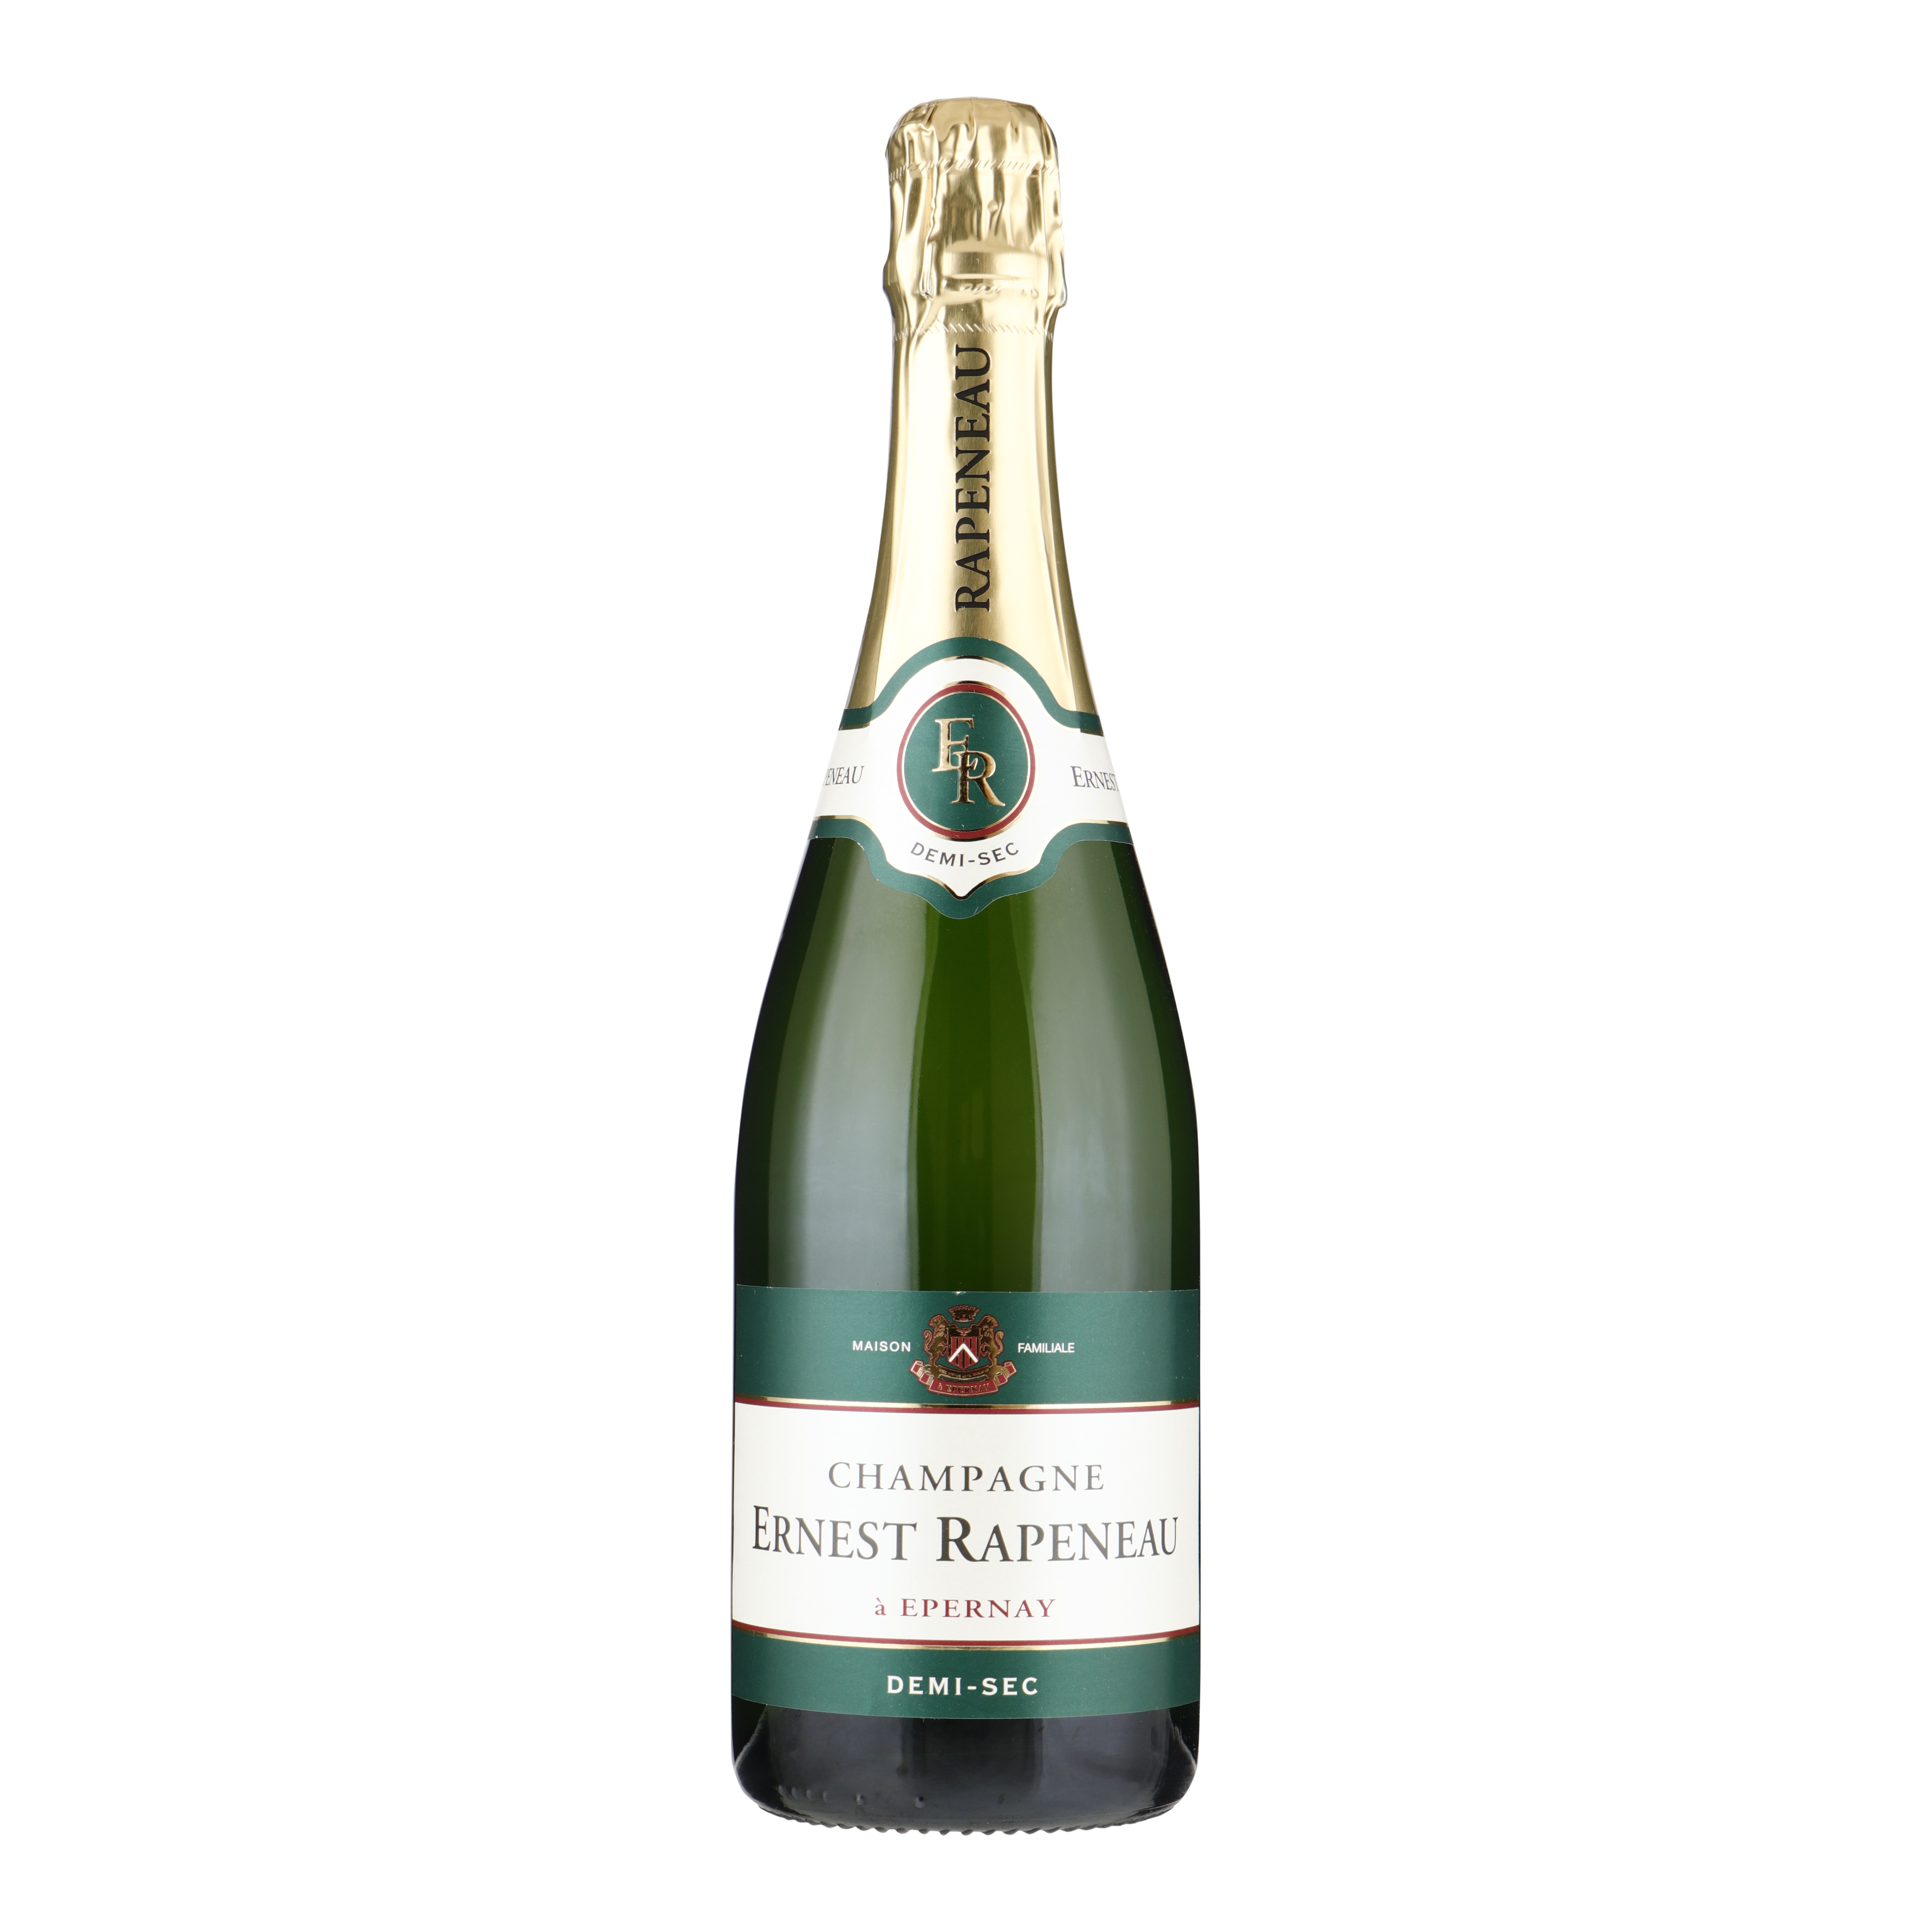 70833 Ernest rapeneau champagne demi-sec 0,75ltr